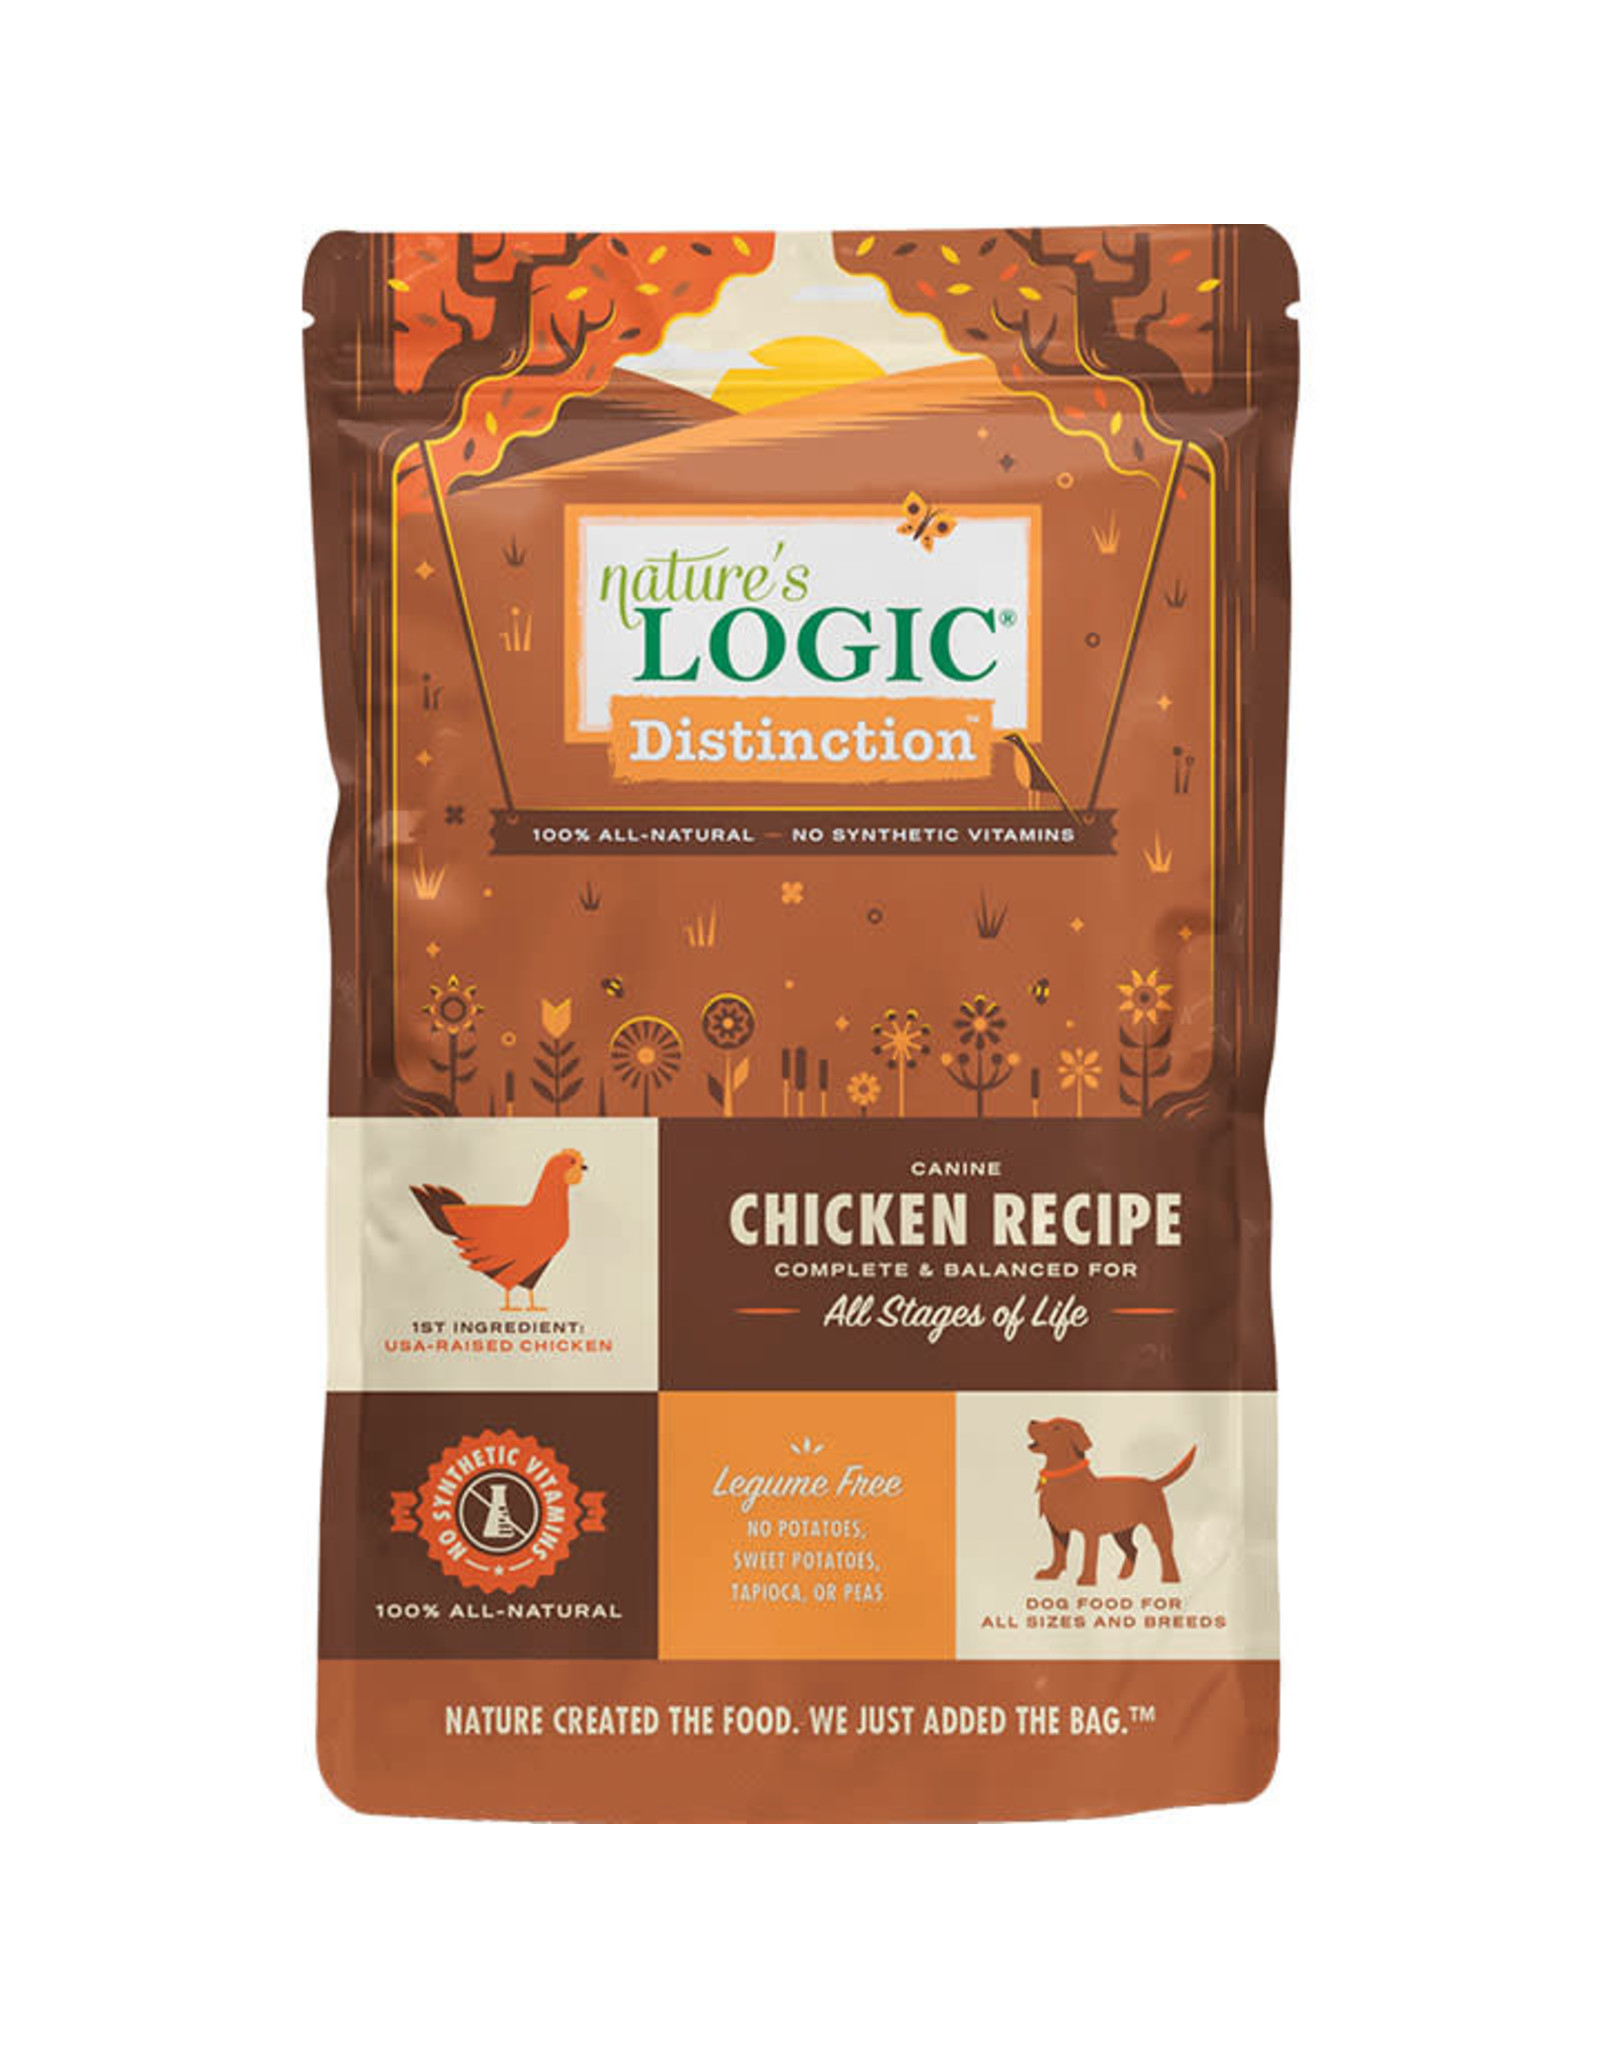 Nature's Logic Nature's Logic Distinction Chicken Recipe Dog Food